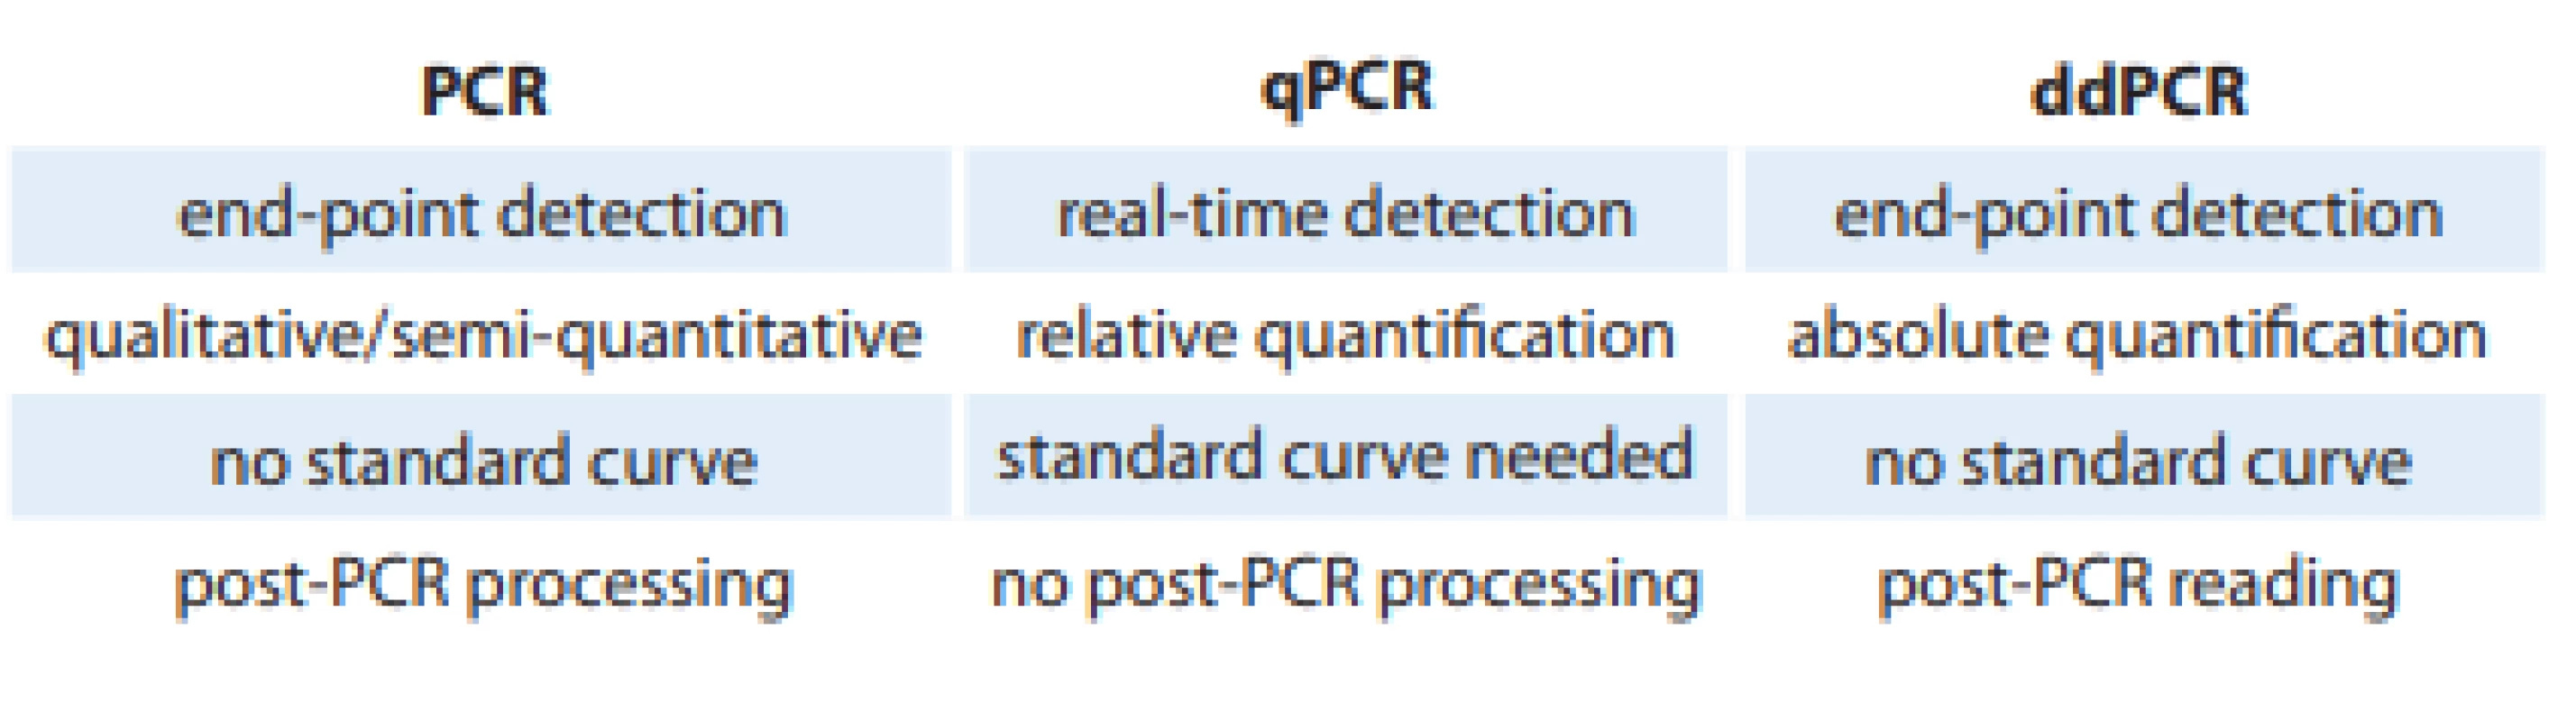 Comparison of PCR, qPCR and ddPCR methods.
